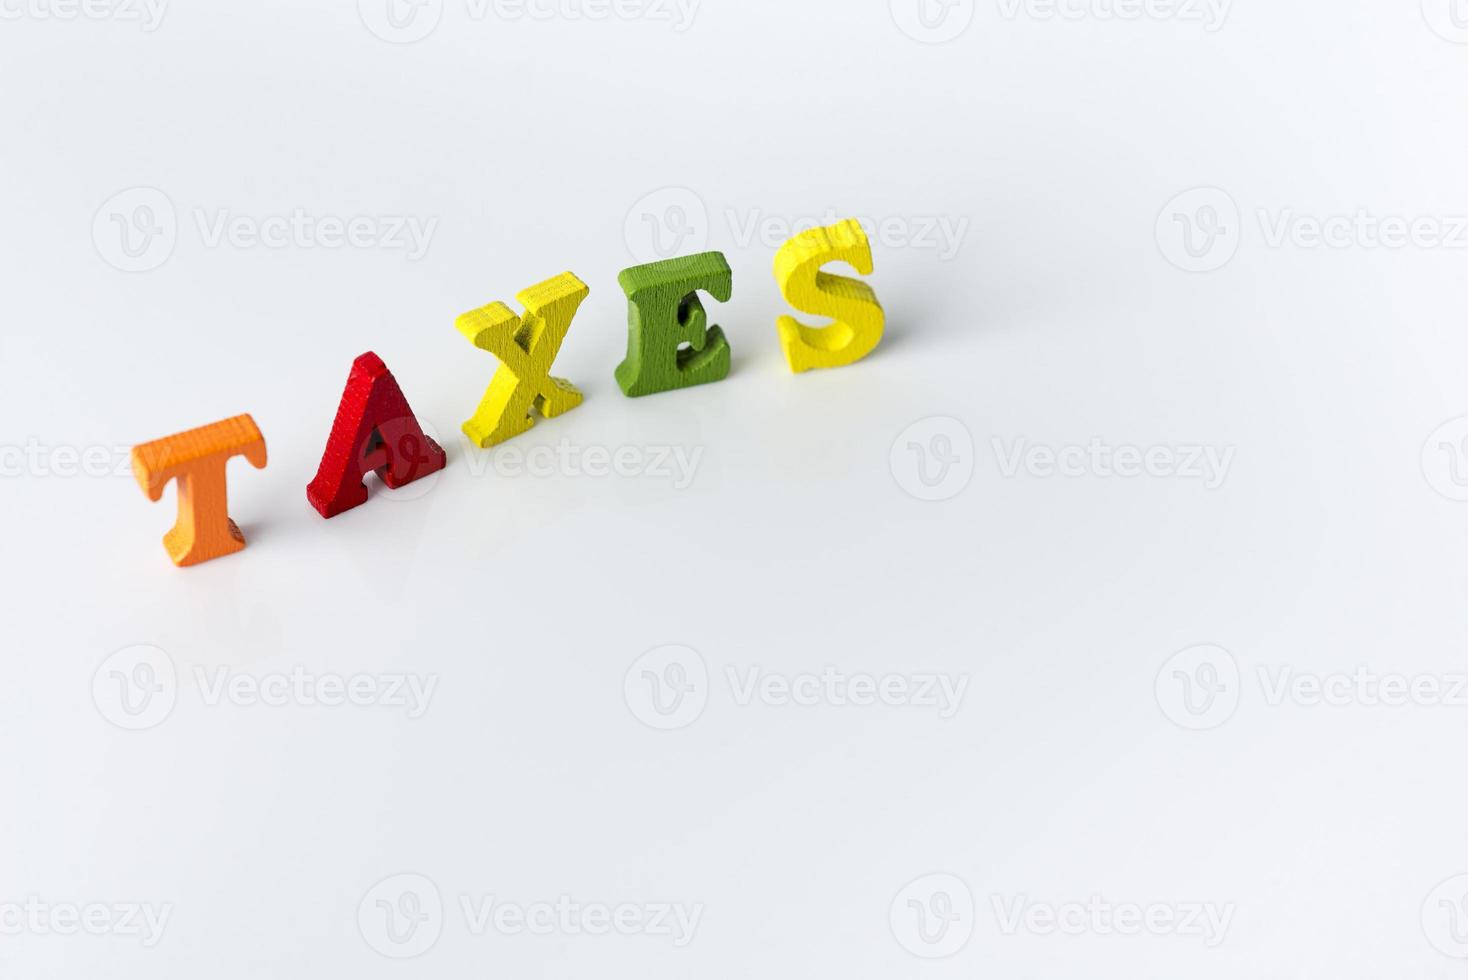 La palabra impuesto sobre fondo blanco. foto